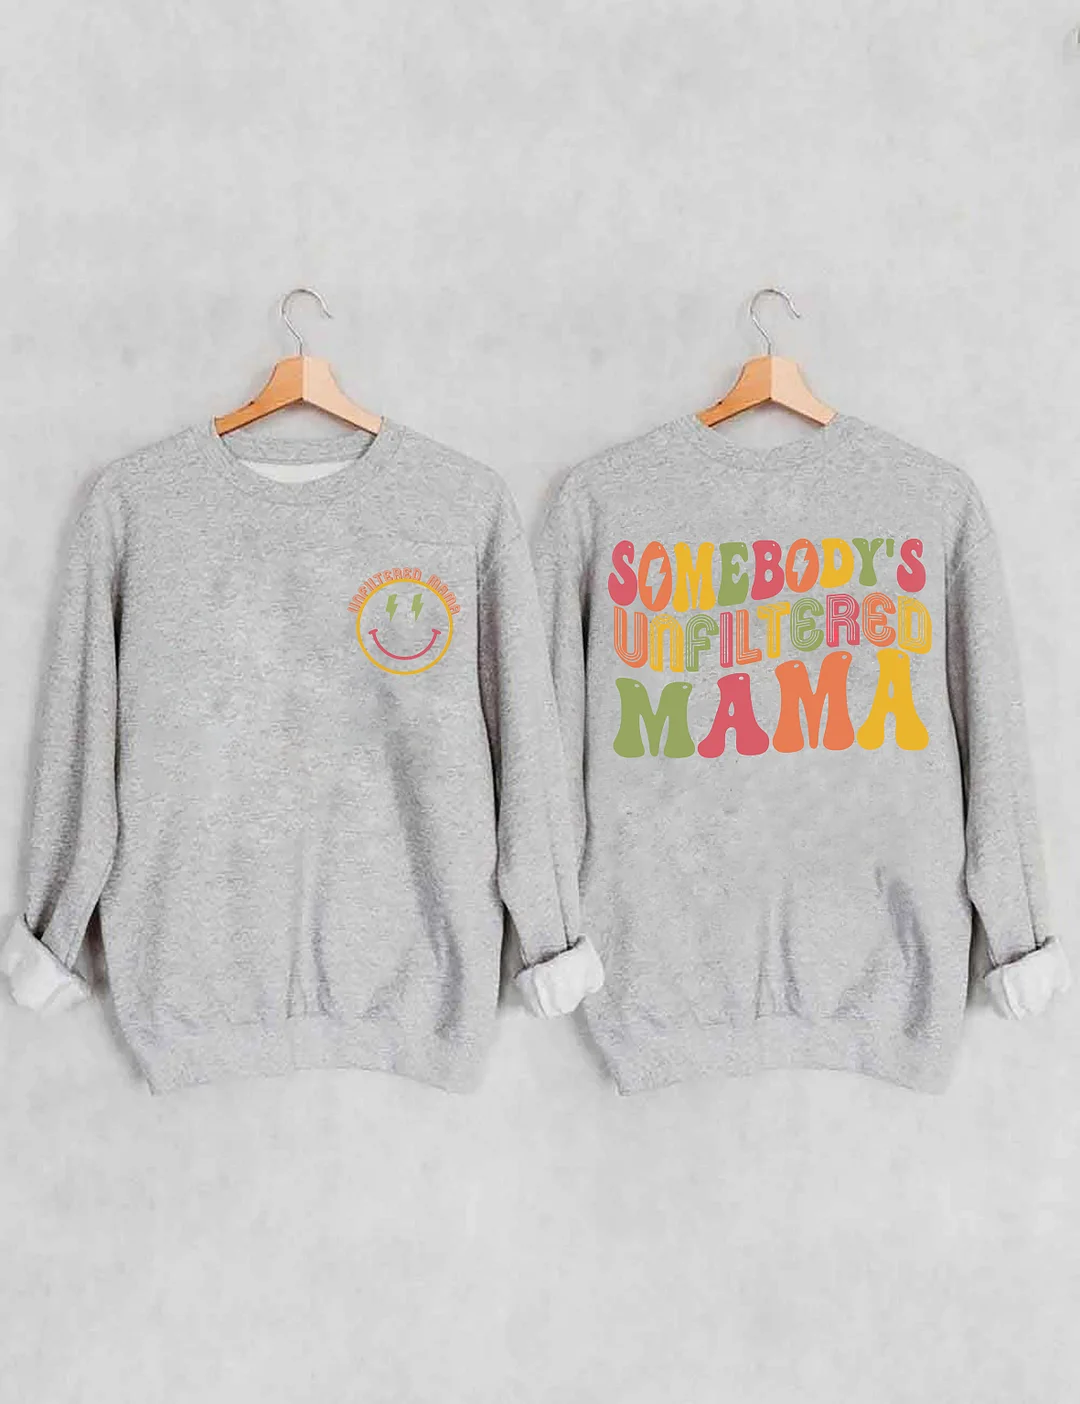 Somebody‘s Unfiltered Mama Sweatshirt